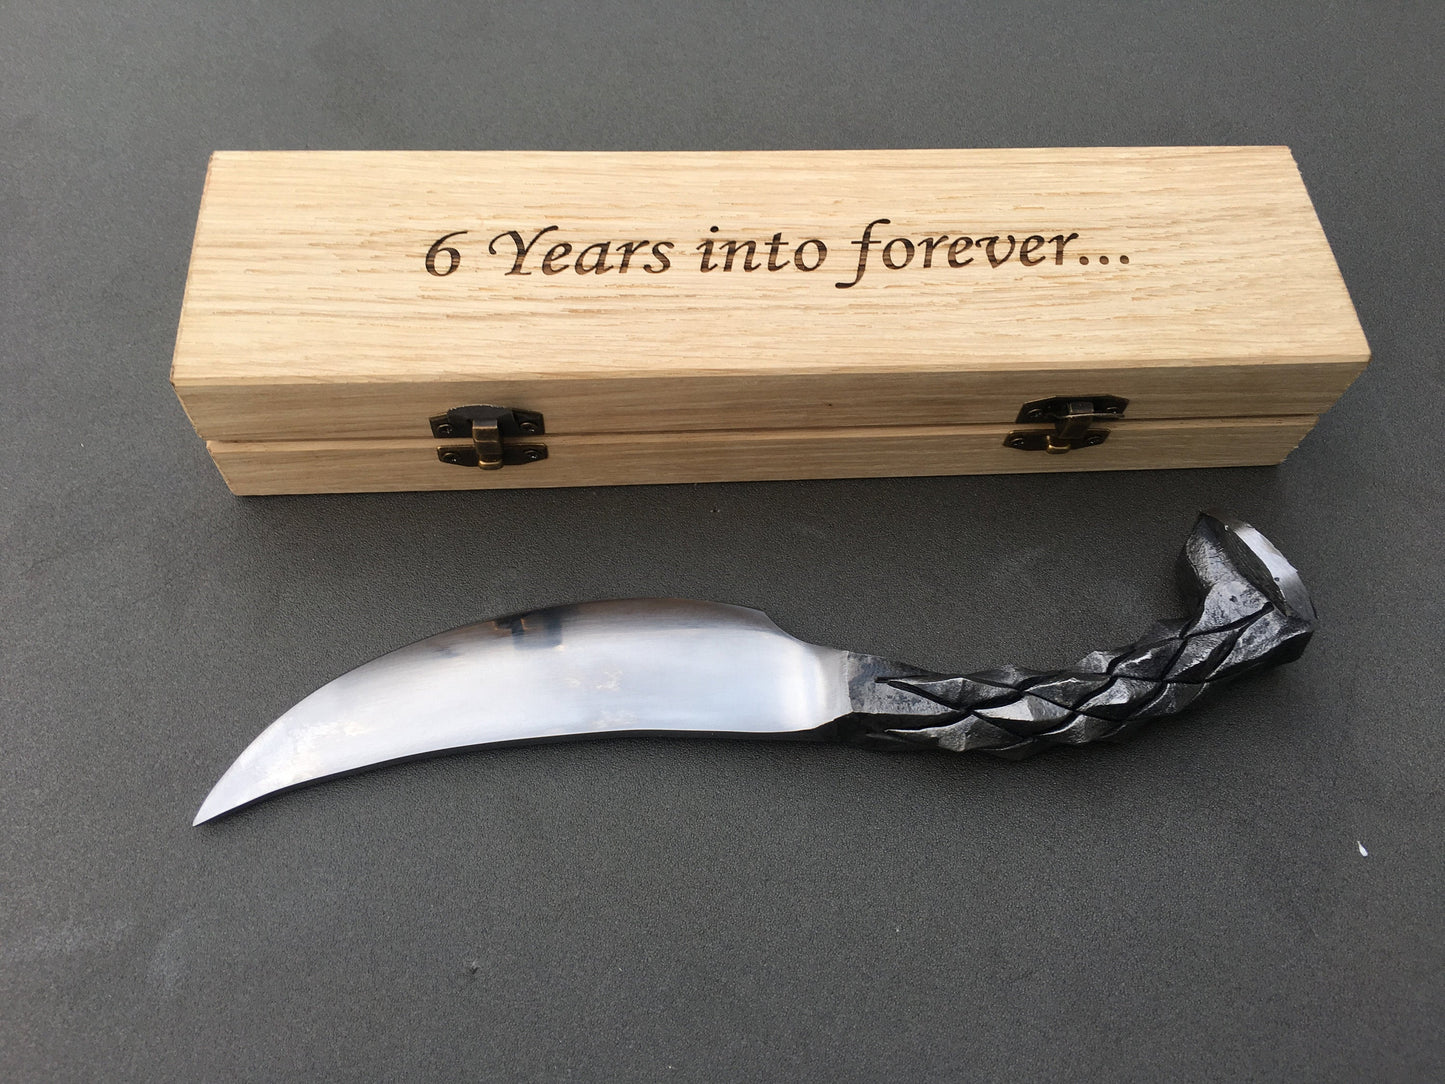 Railroad spike knife, iron anniversary, iron gift for him, mens gifts, engraved knife, gift box, knife decor, knife for groomsmen, knife set